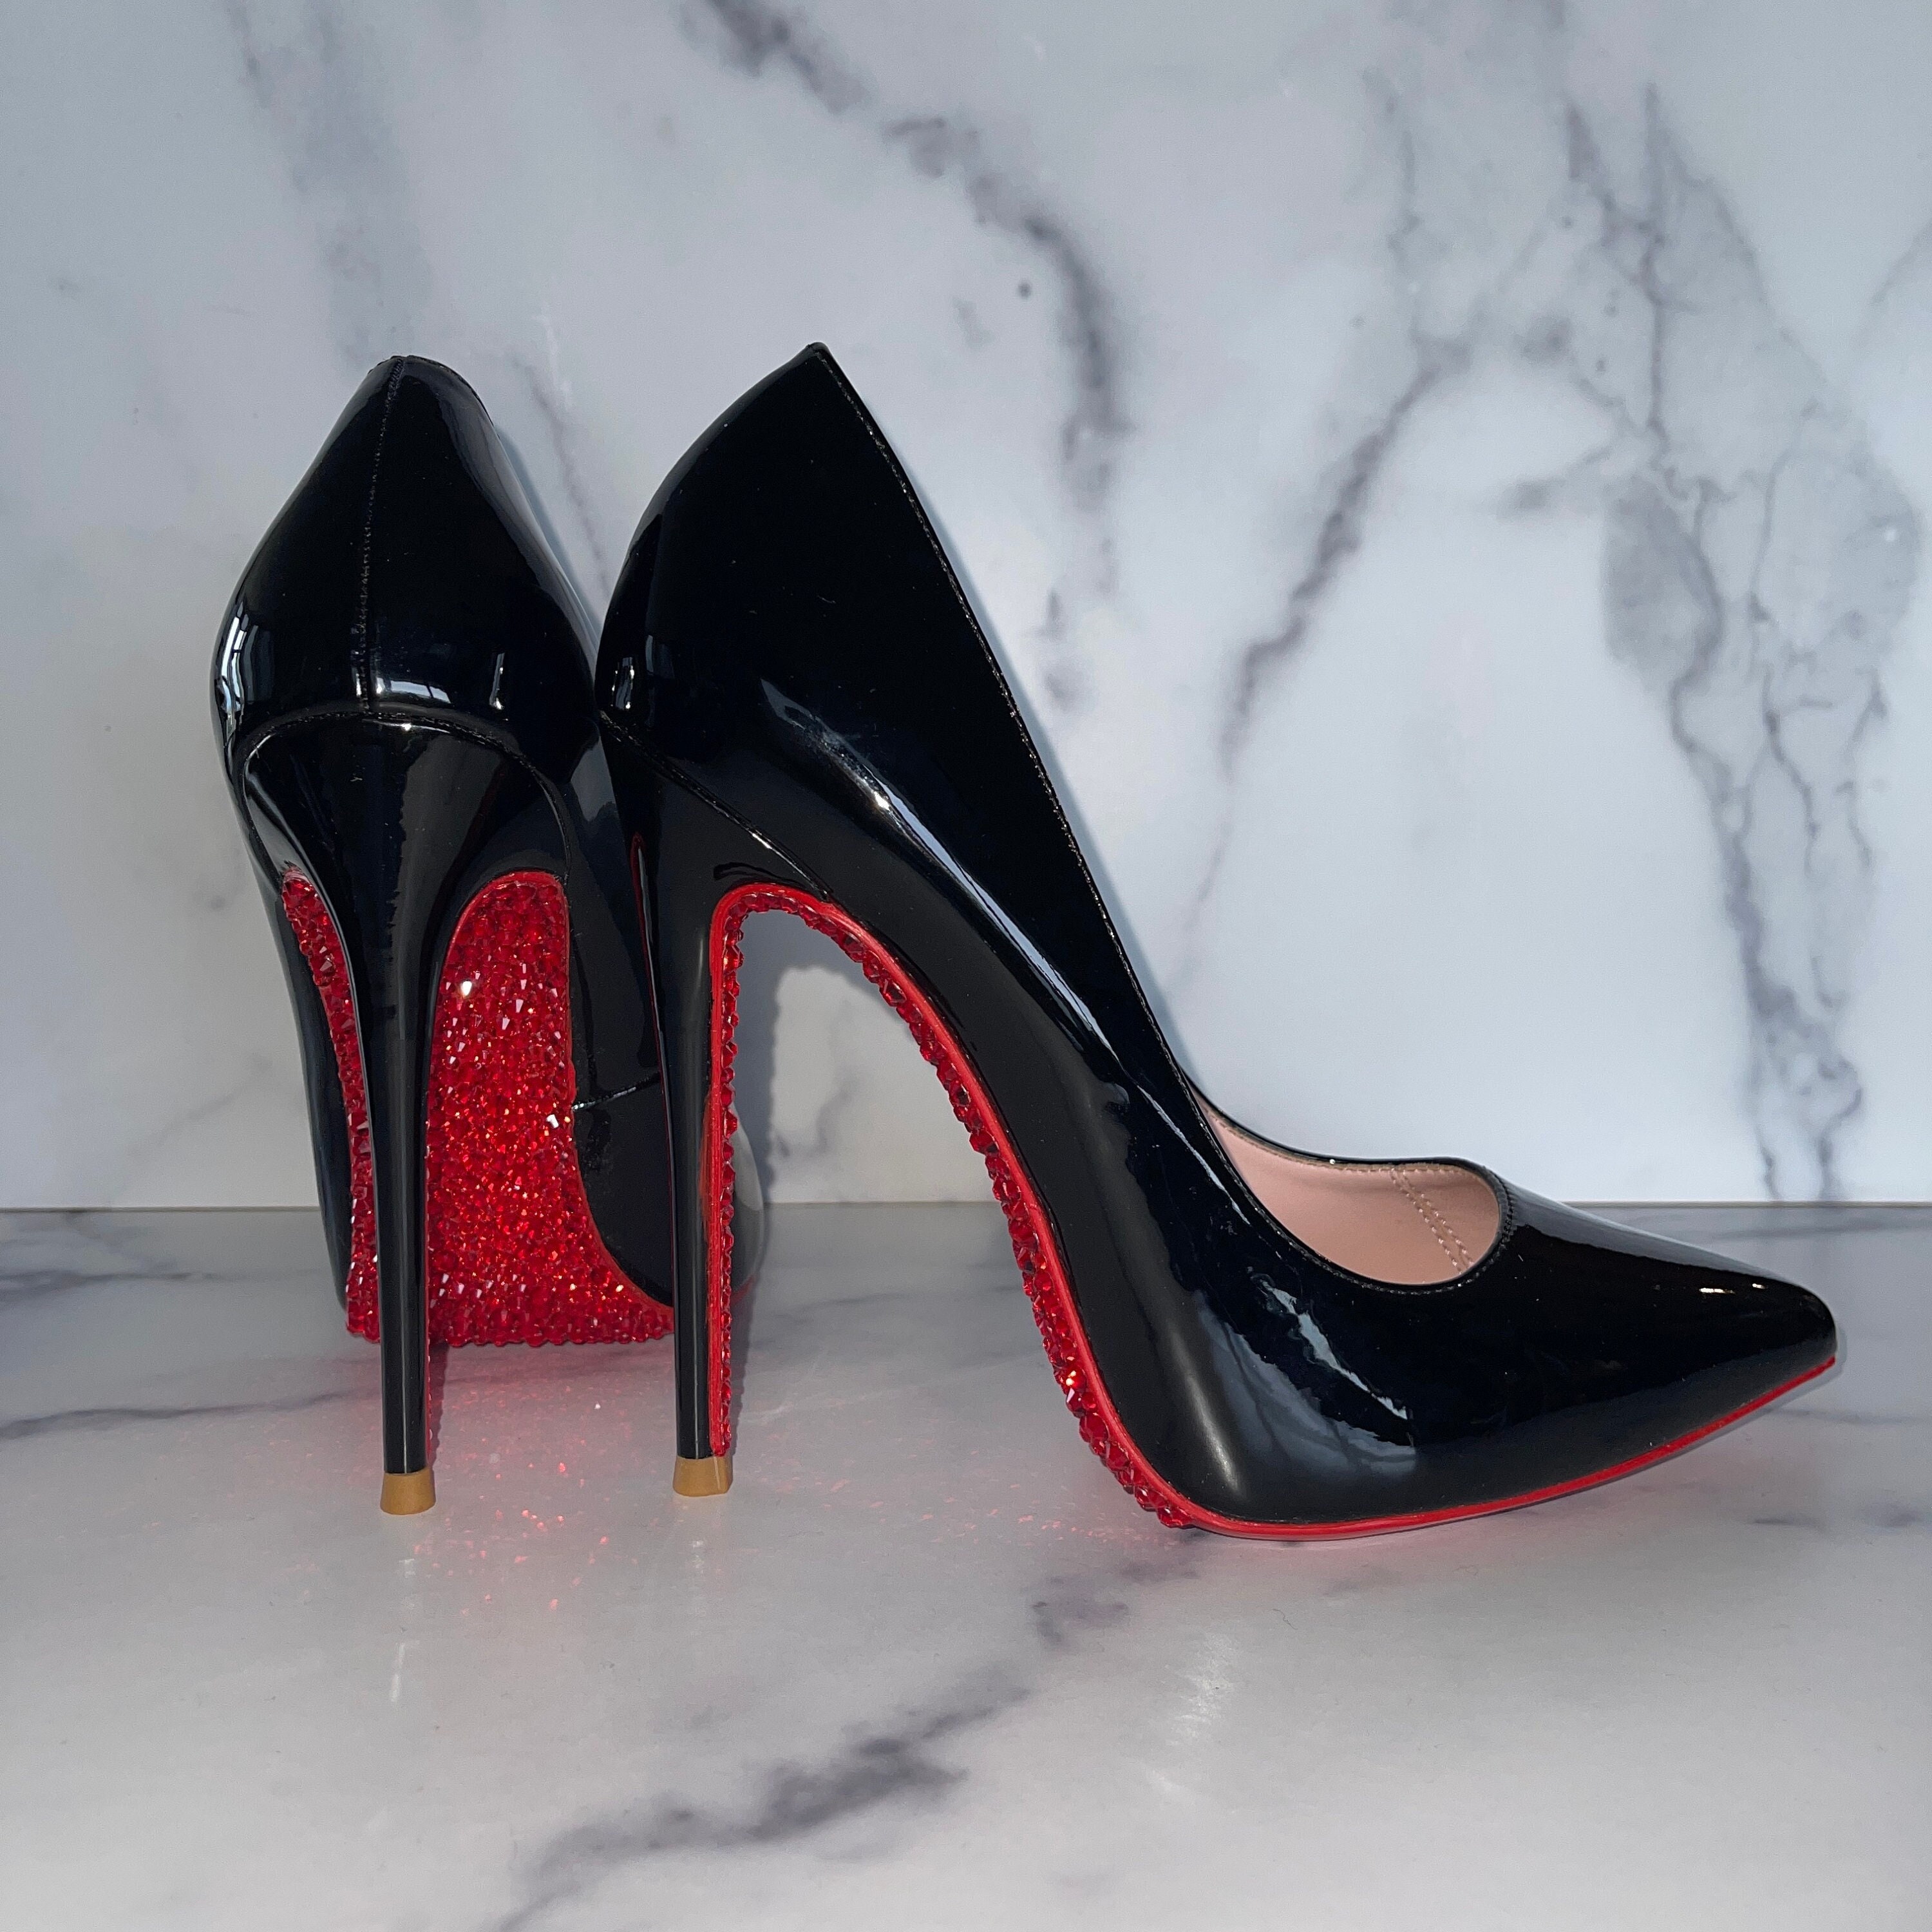 Buy Sherrif Shoes Womens Red Stiletto Heels Pumps Online